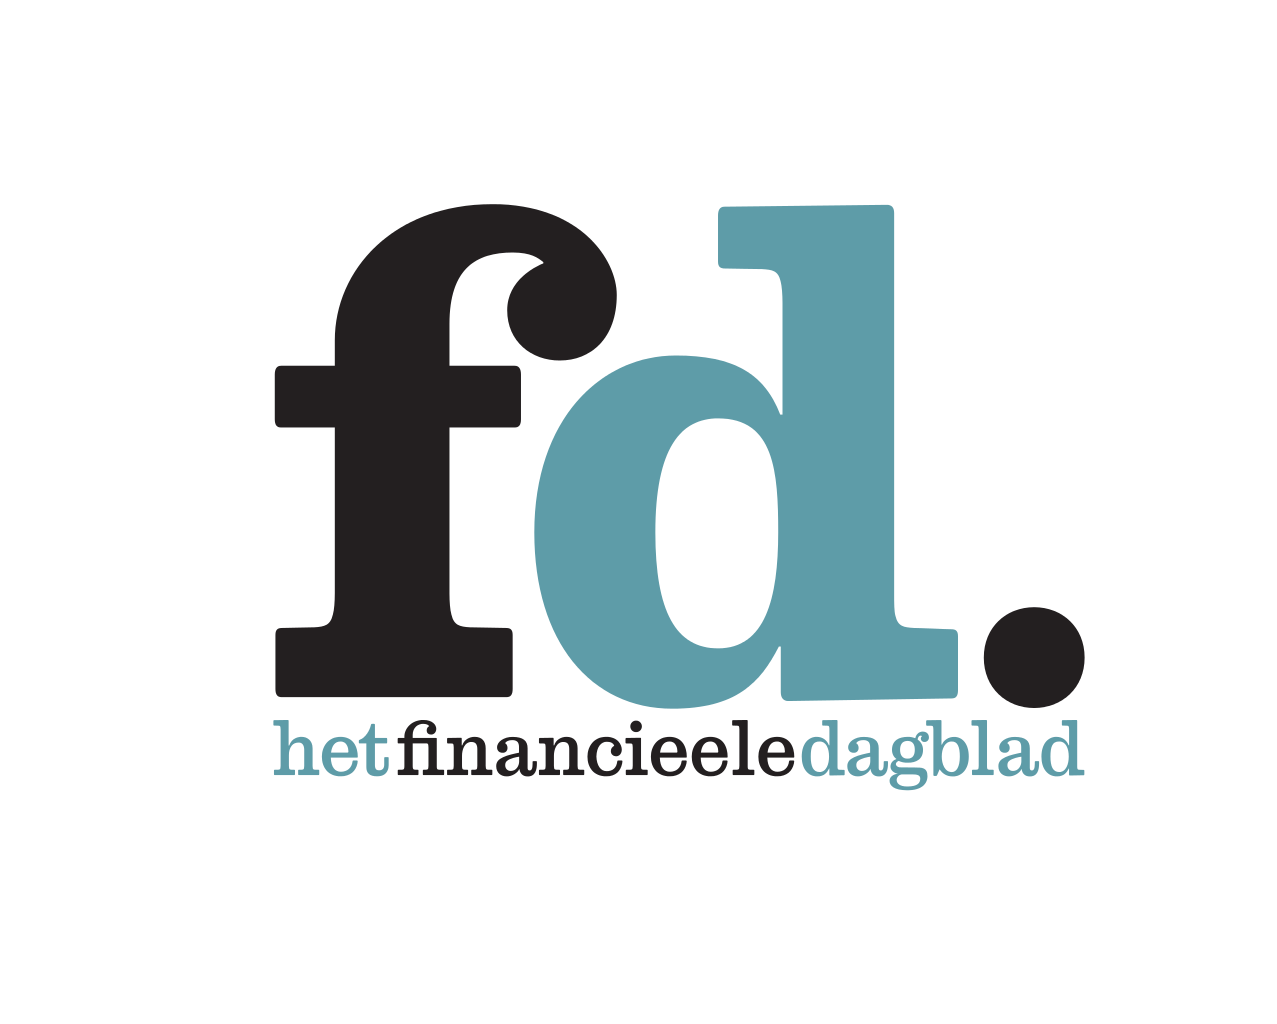 logo-het-financieele-dagbladsvg